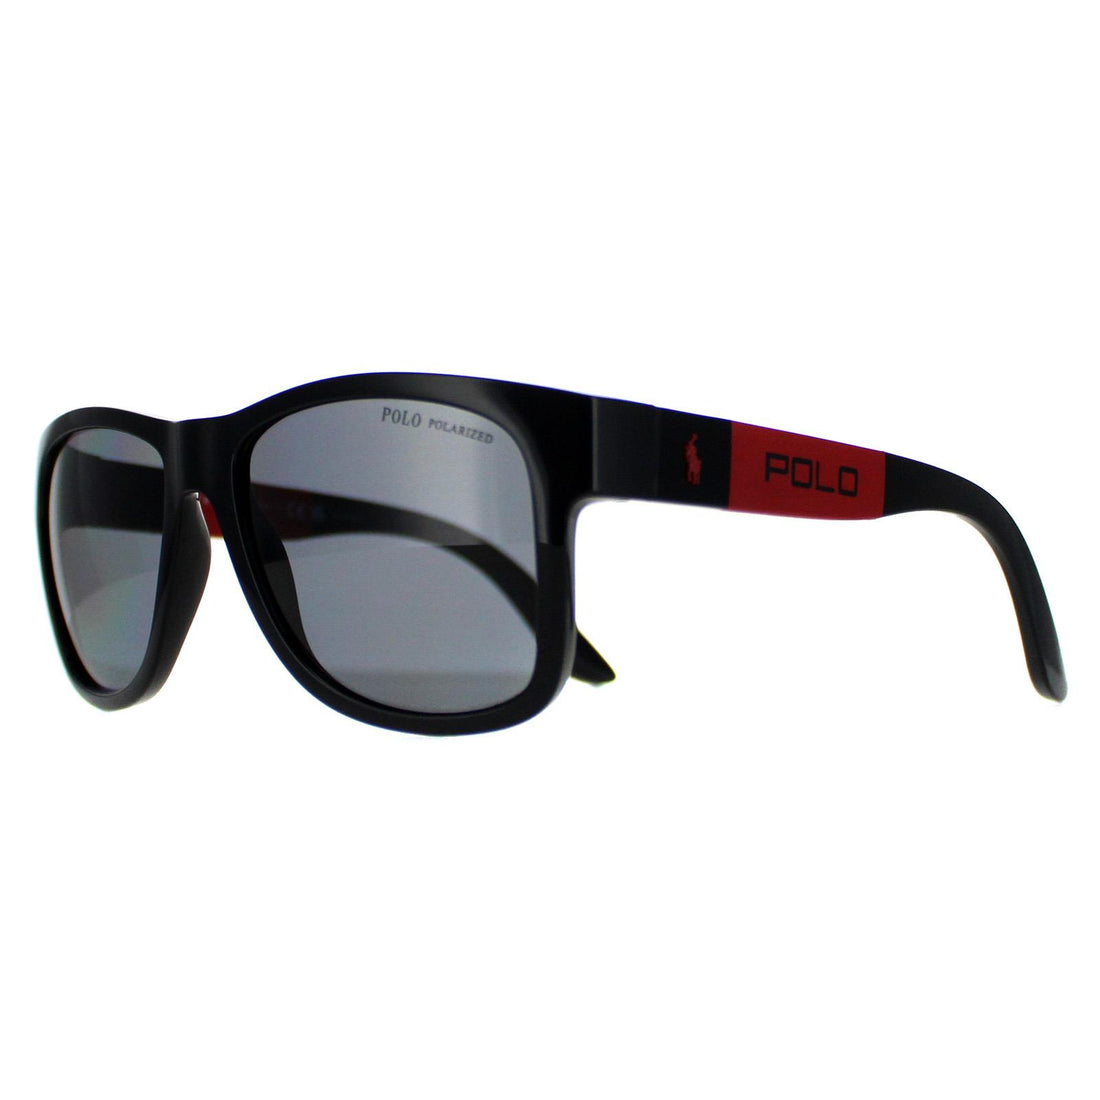 Polo Ralph Lauren Sunglasses PH4162 500181 Shiny Black Grey Polarised